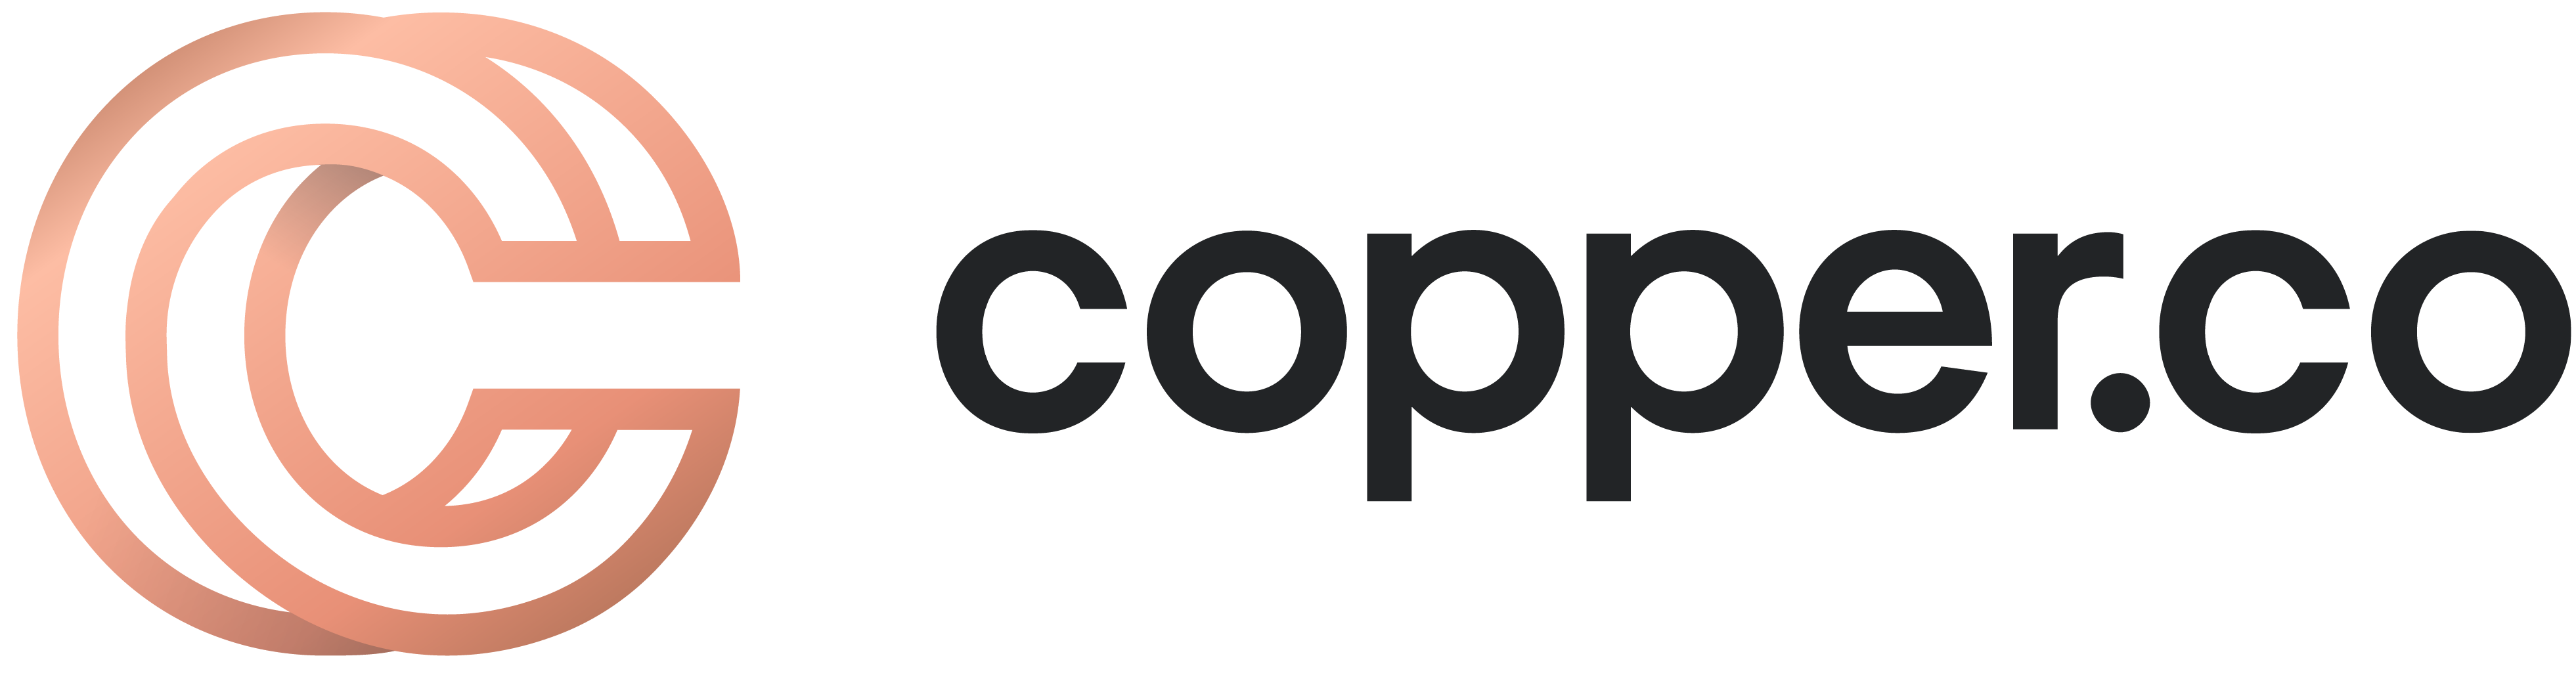 Copper-Logos